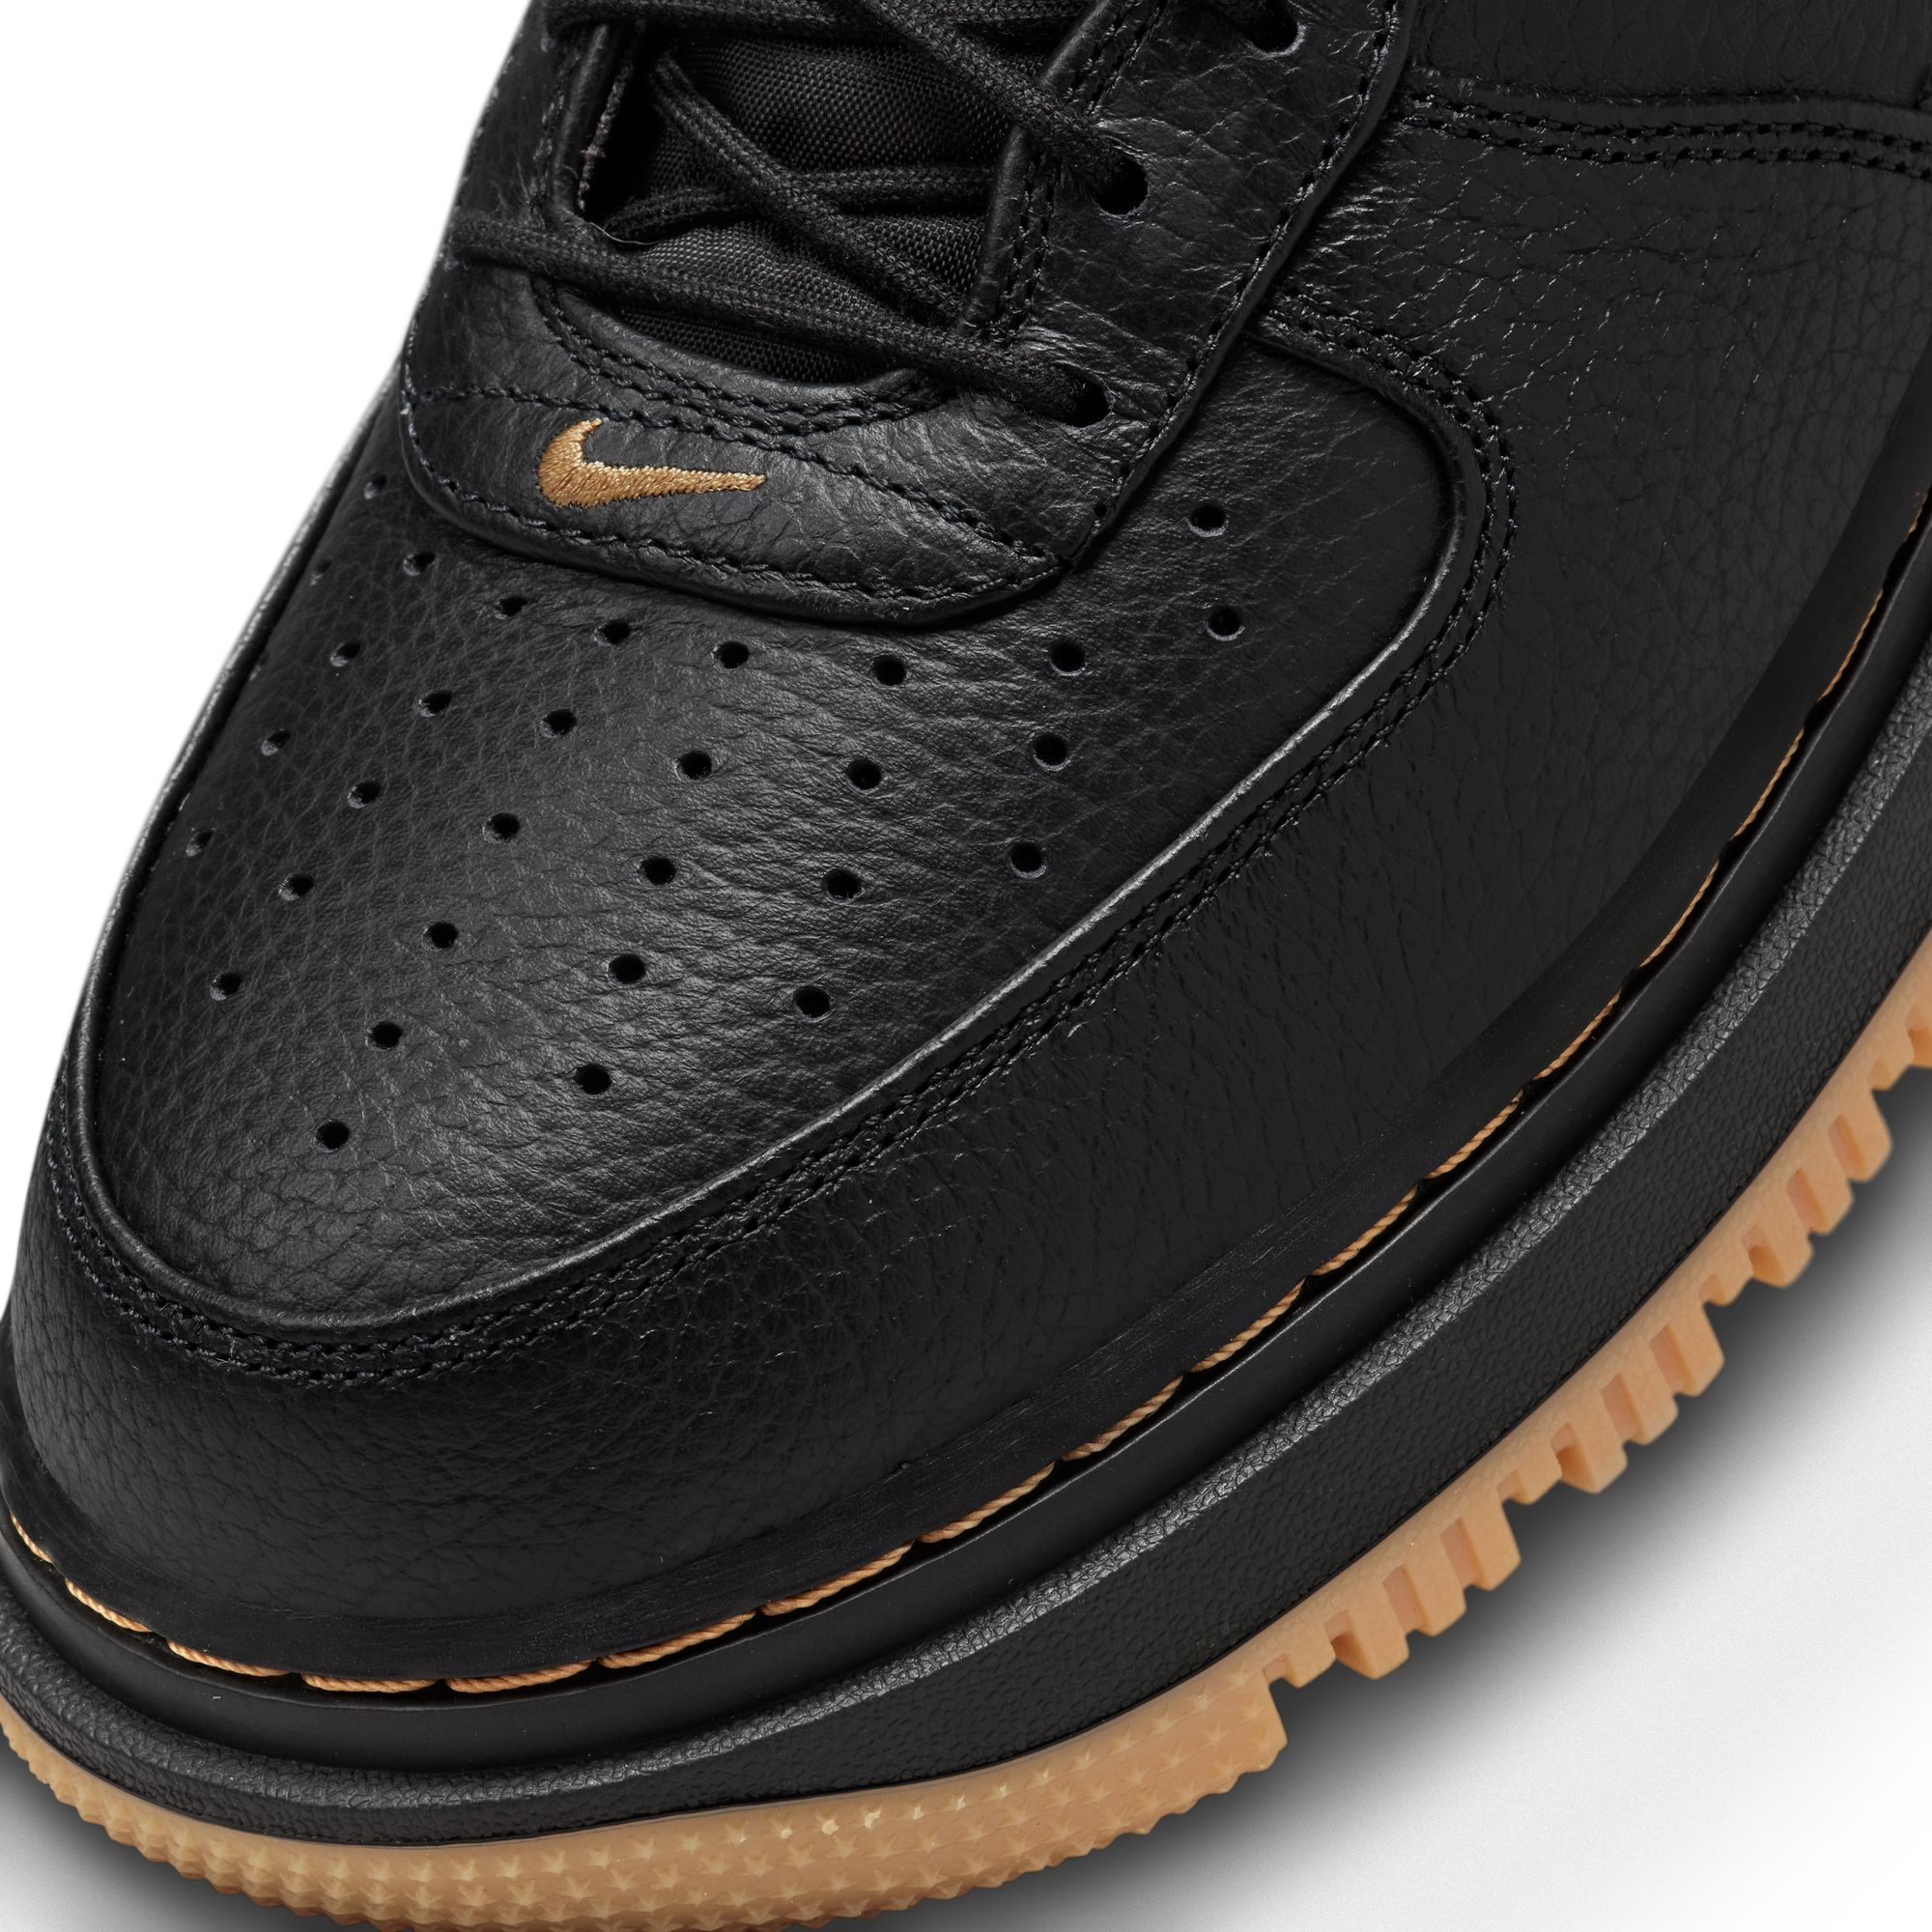 Men's shoes Nike Air Force 1 Luxe Black/ Black-Bucktan-Gum Yellow